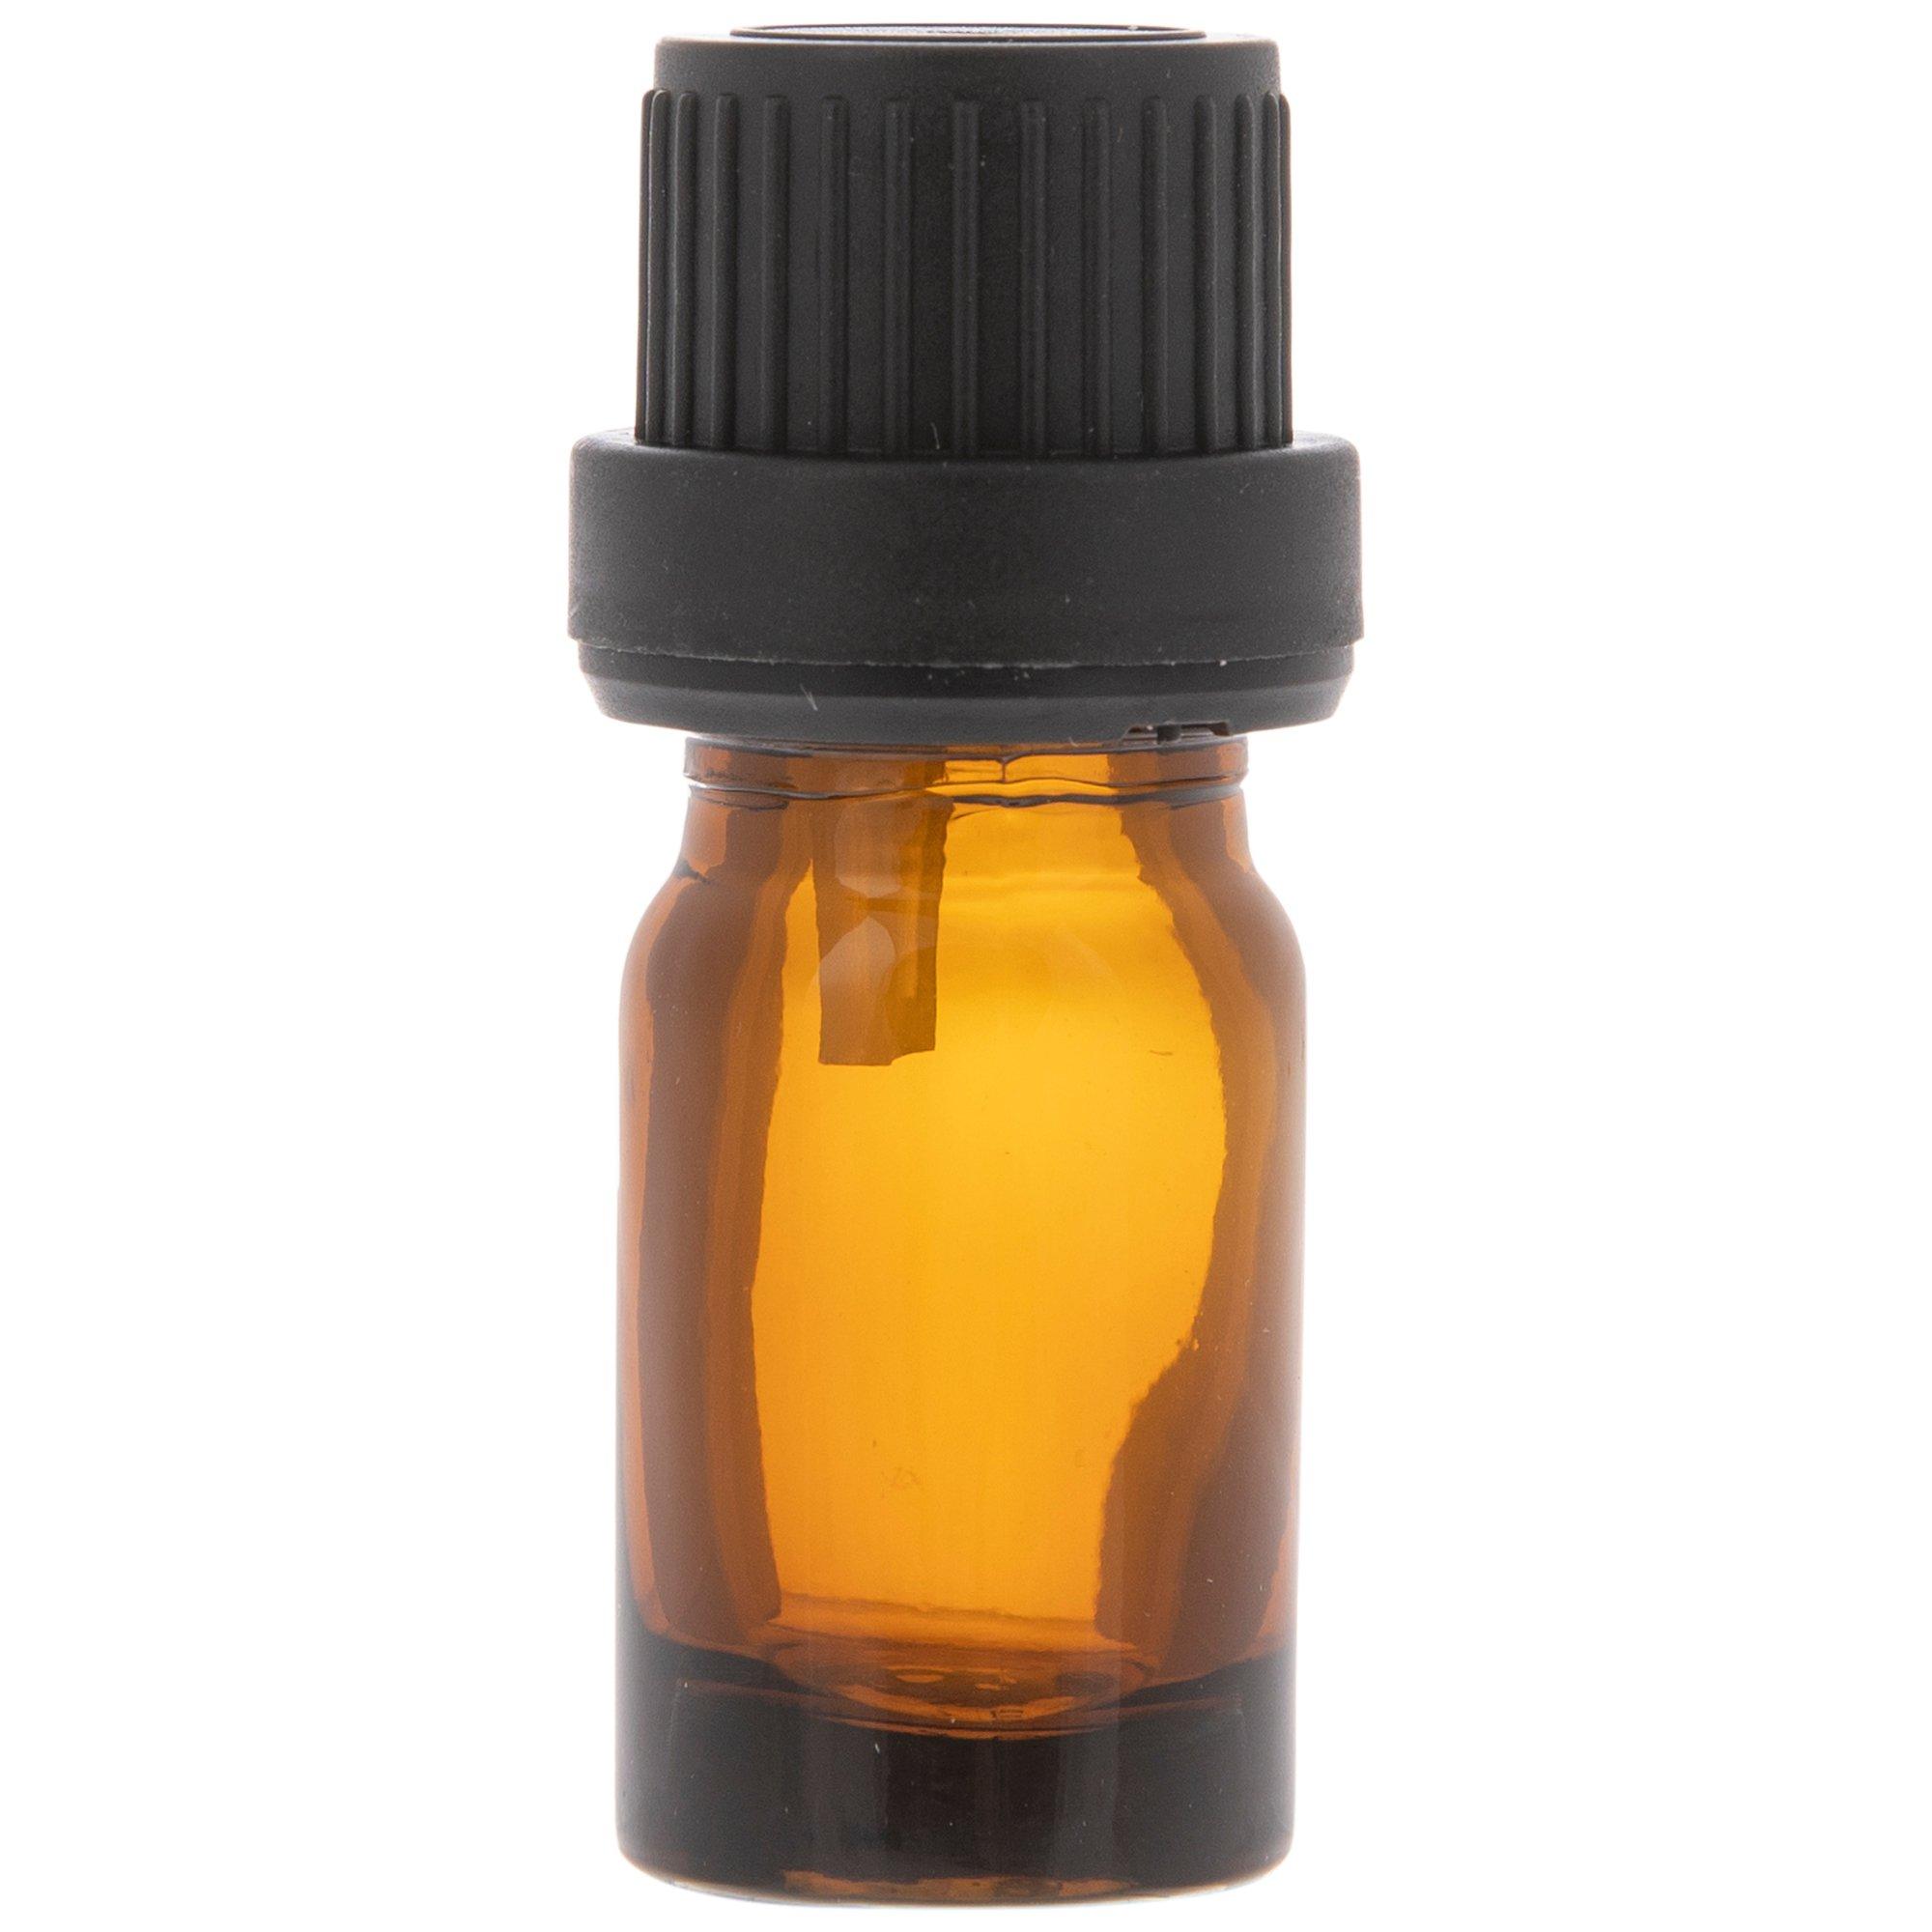 24pcs 5ml 10ml 15ml Amber Essential Oil Glass Bottles With Black Cap  Refillable Dropper Bottles for